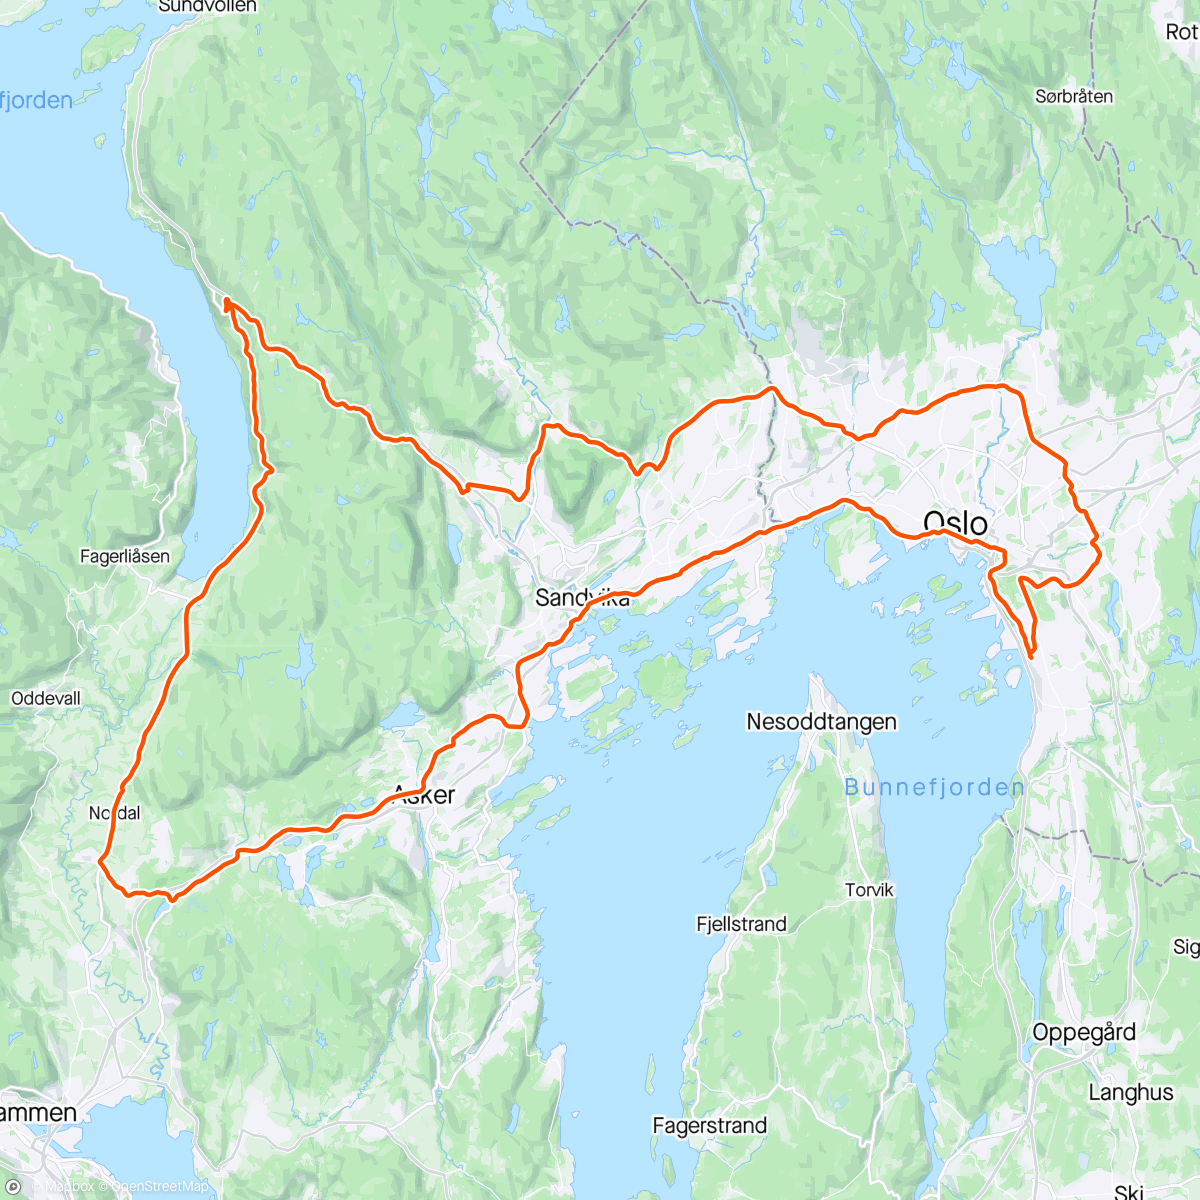 「Bærumsrunden」活動的地圖